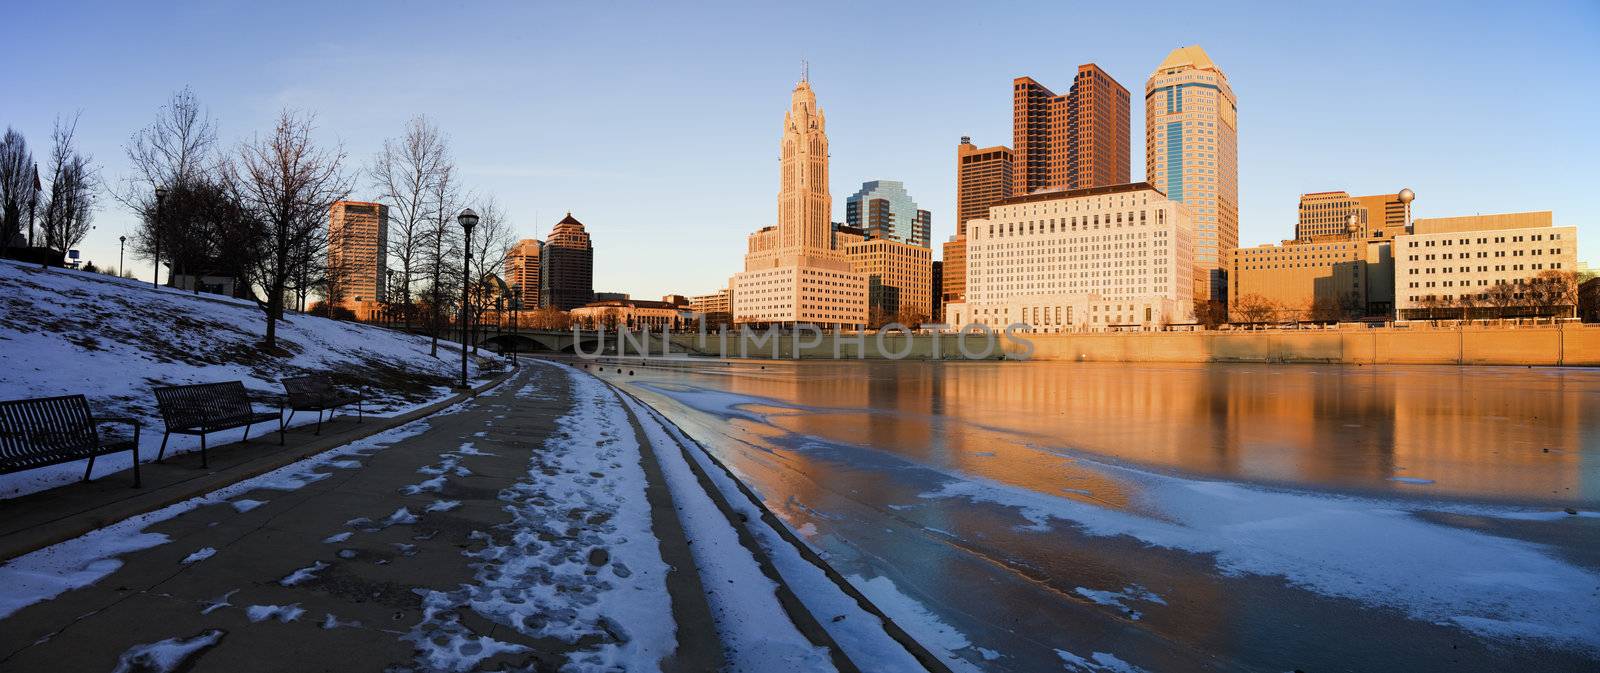 Winter in Columbus, Ohio - panoramic view of the city